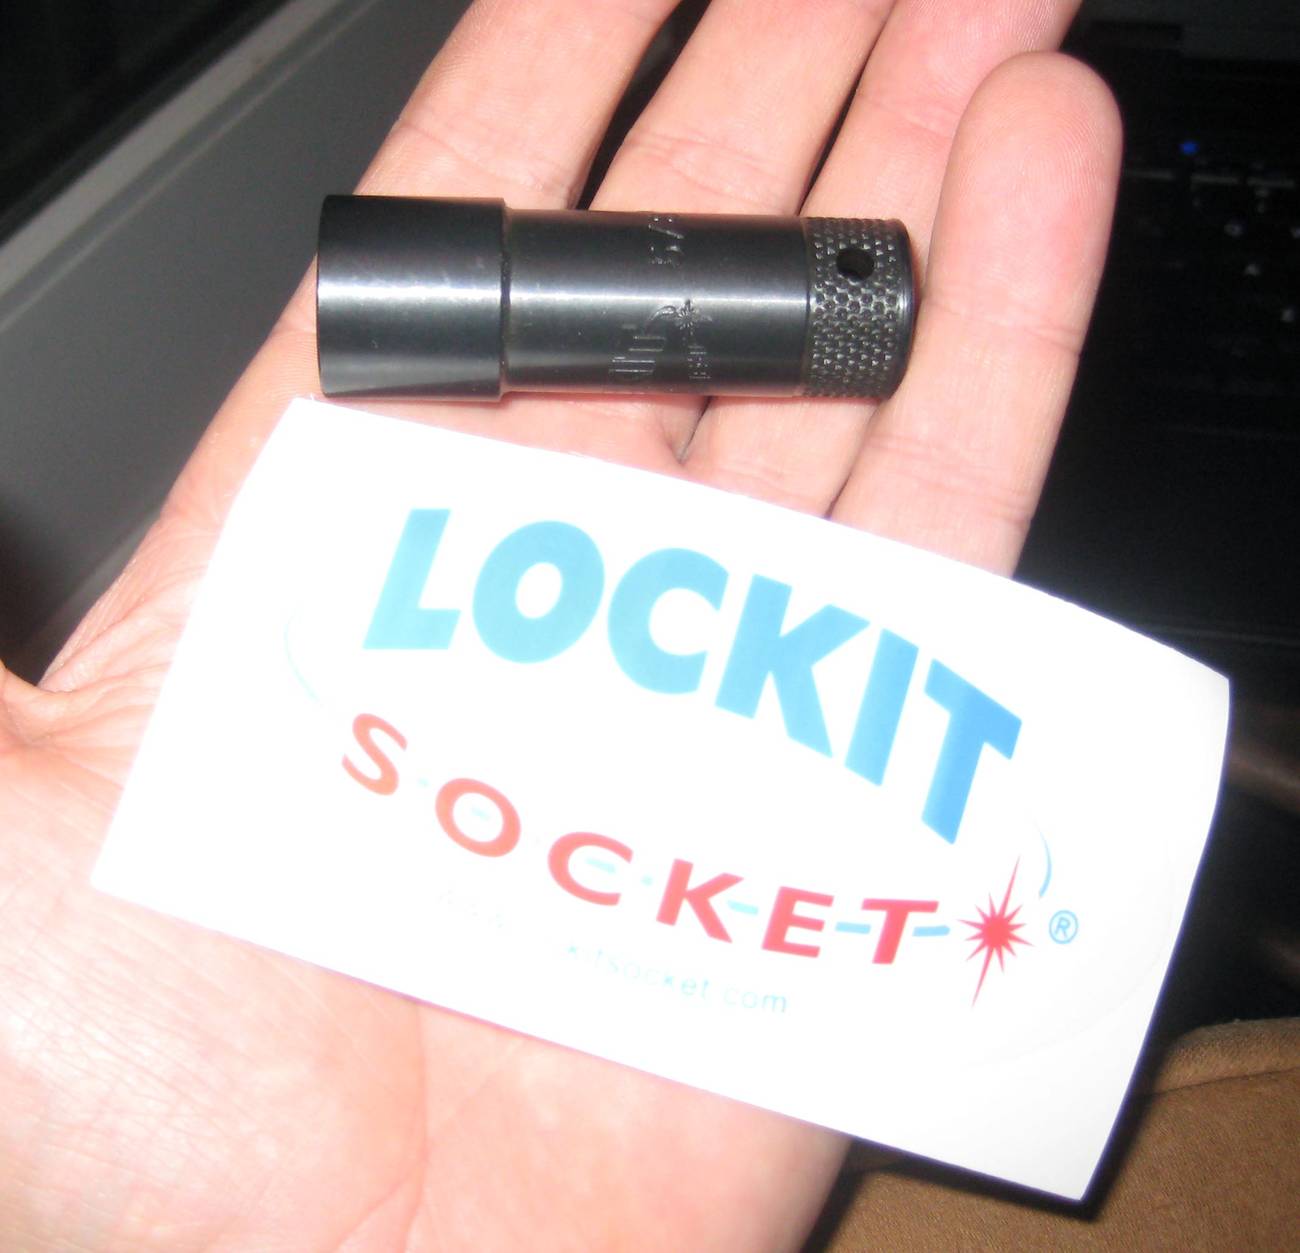 lockit_socket